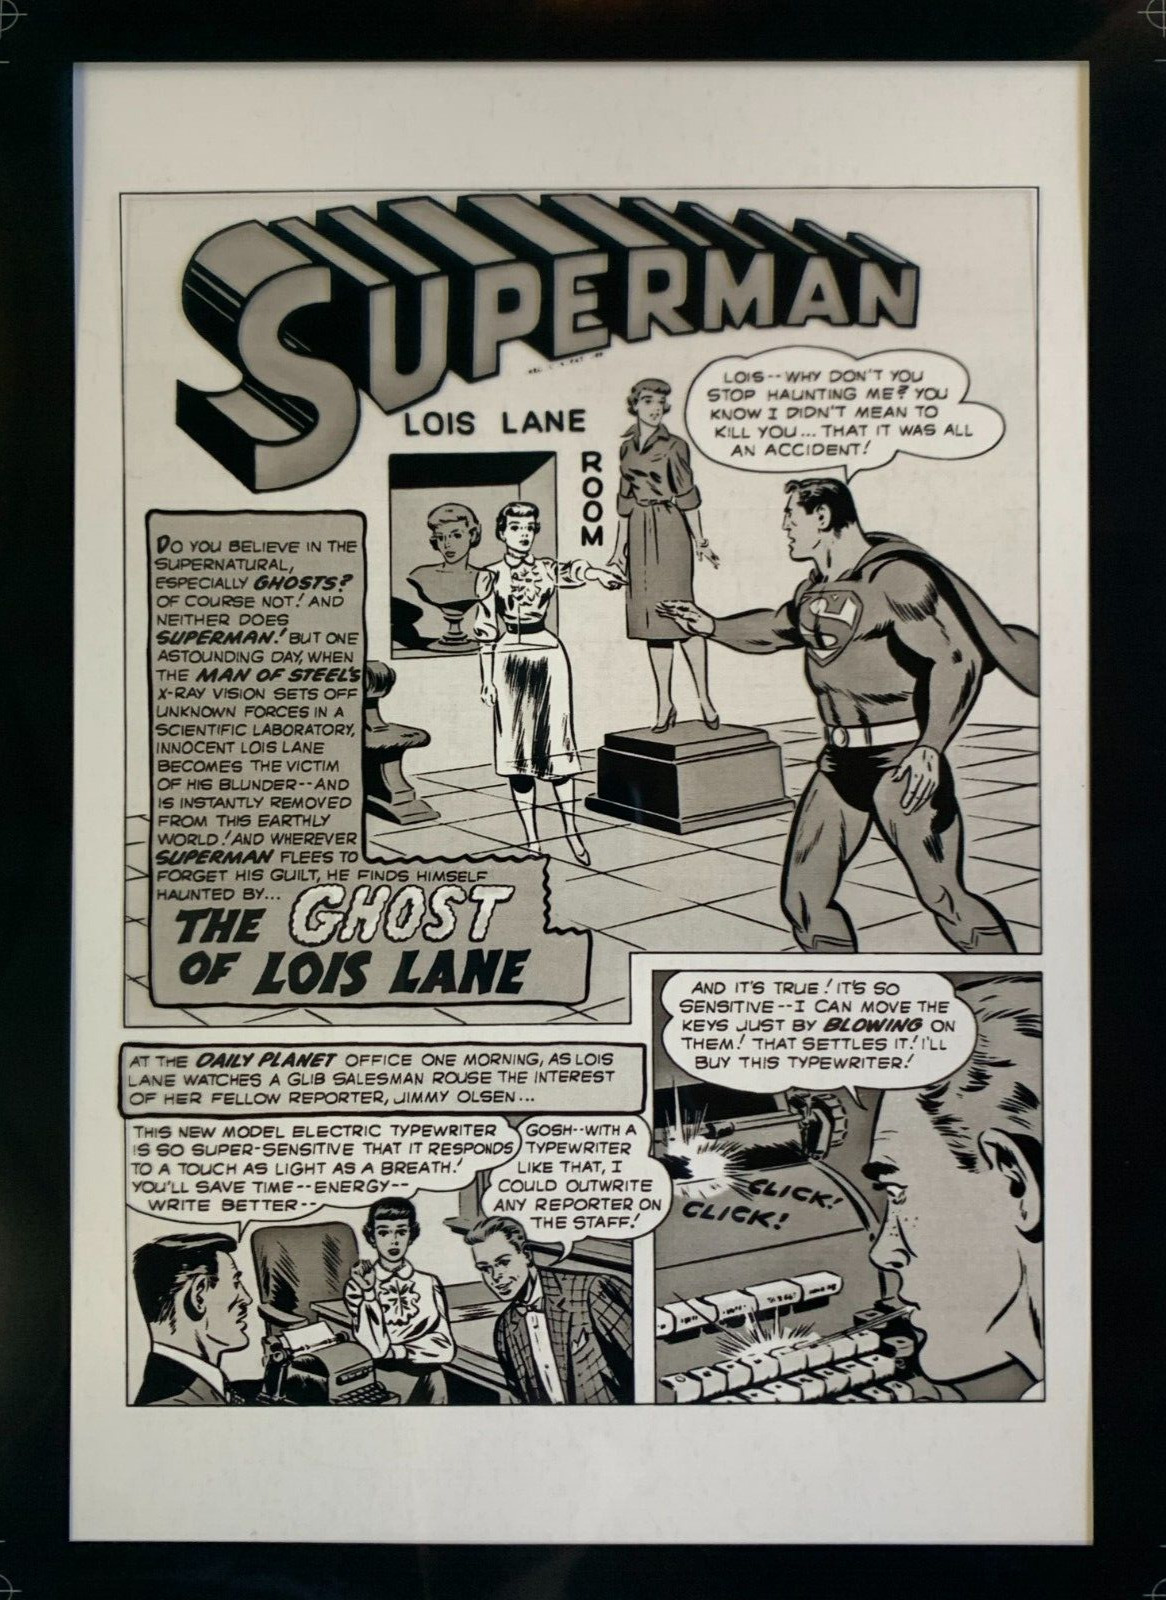 Production Art SUPERMAN #129, page #1, WAYNE BORING art, 8.5x11, Lois Lane